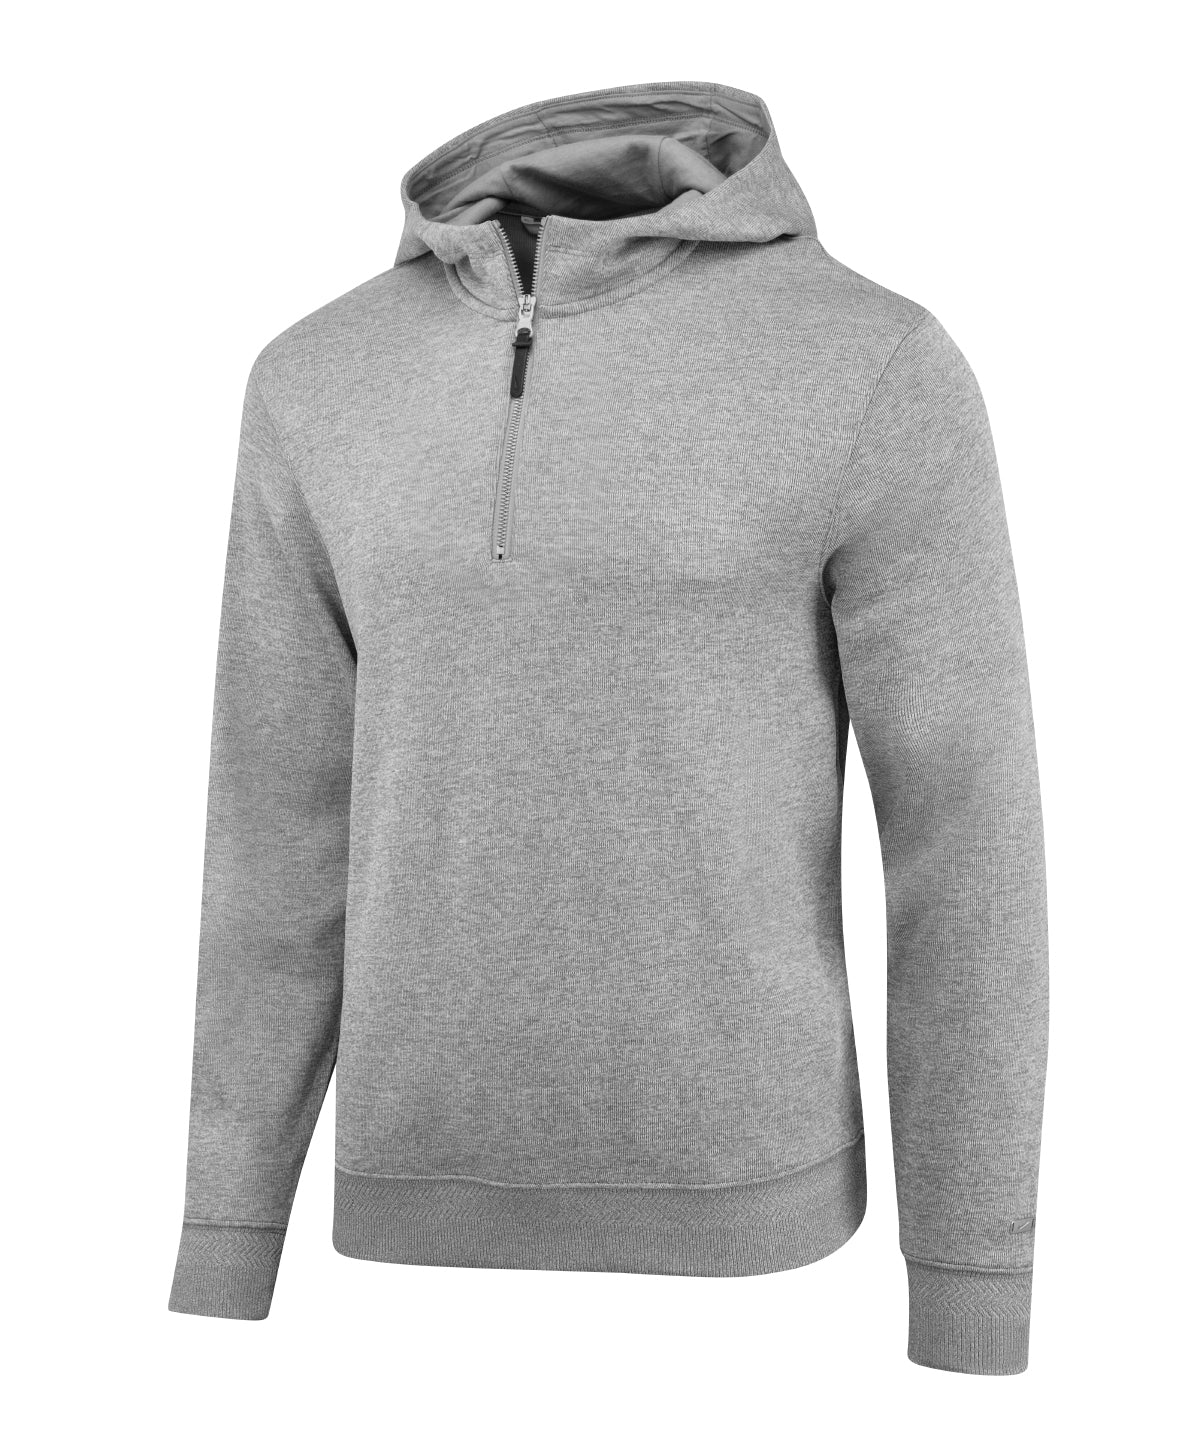 Nike Dri-FIT player hoodie